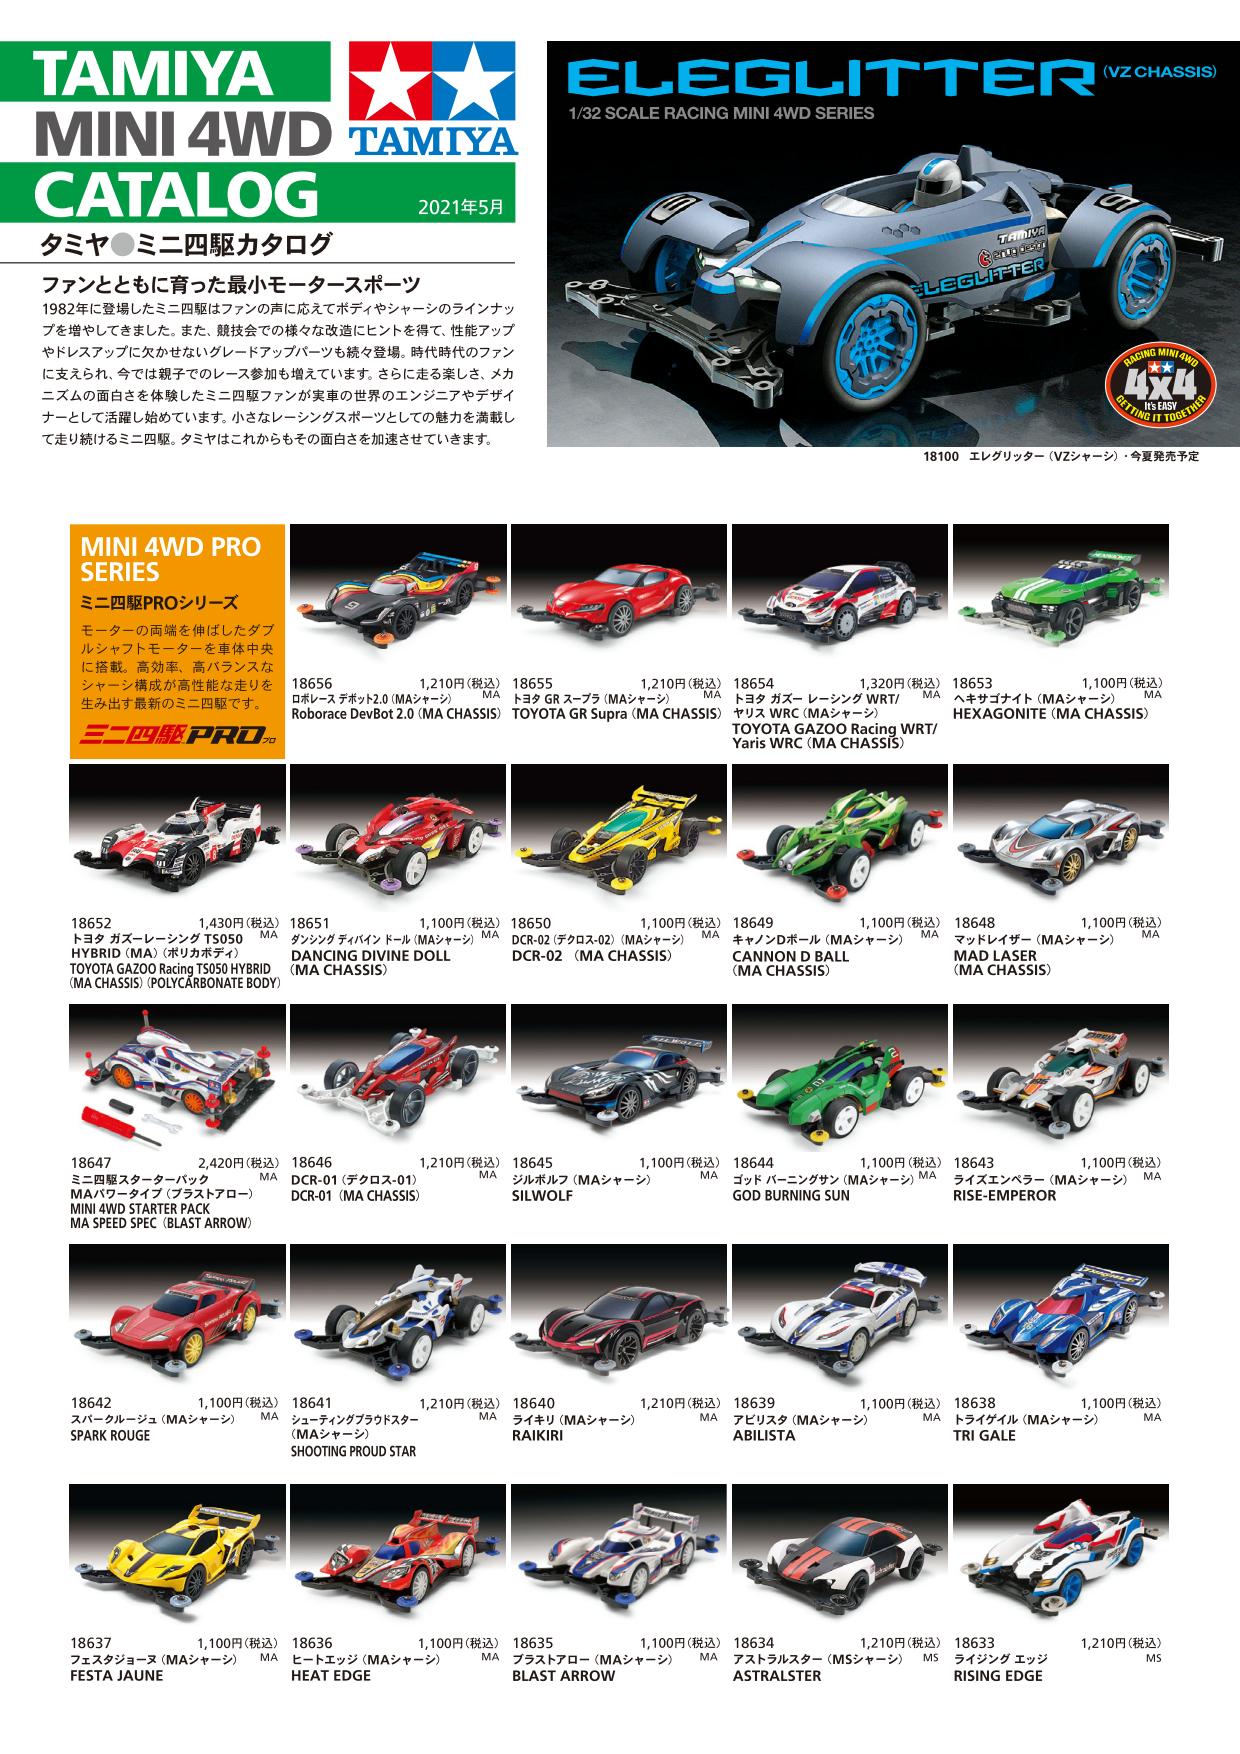 Tamiya Mini 4WD Catalogue 2021/5 - TamiyaBlog